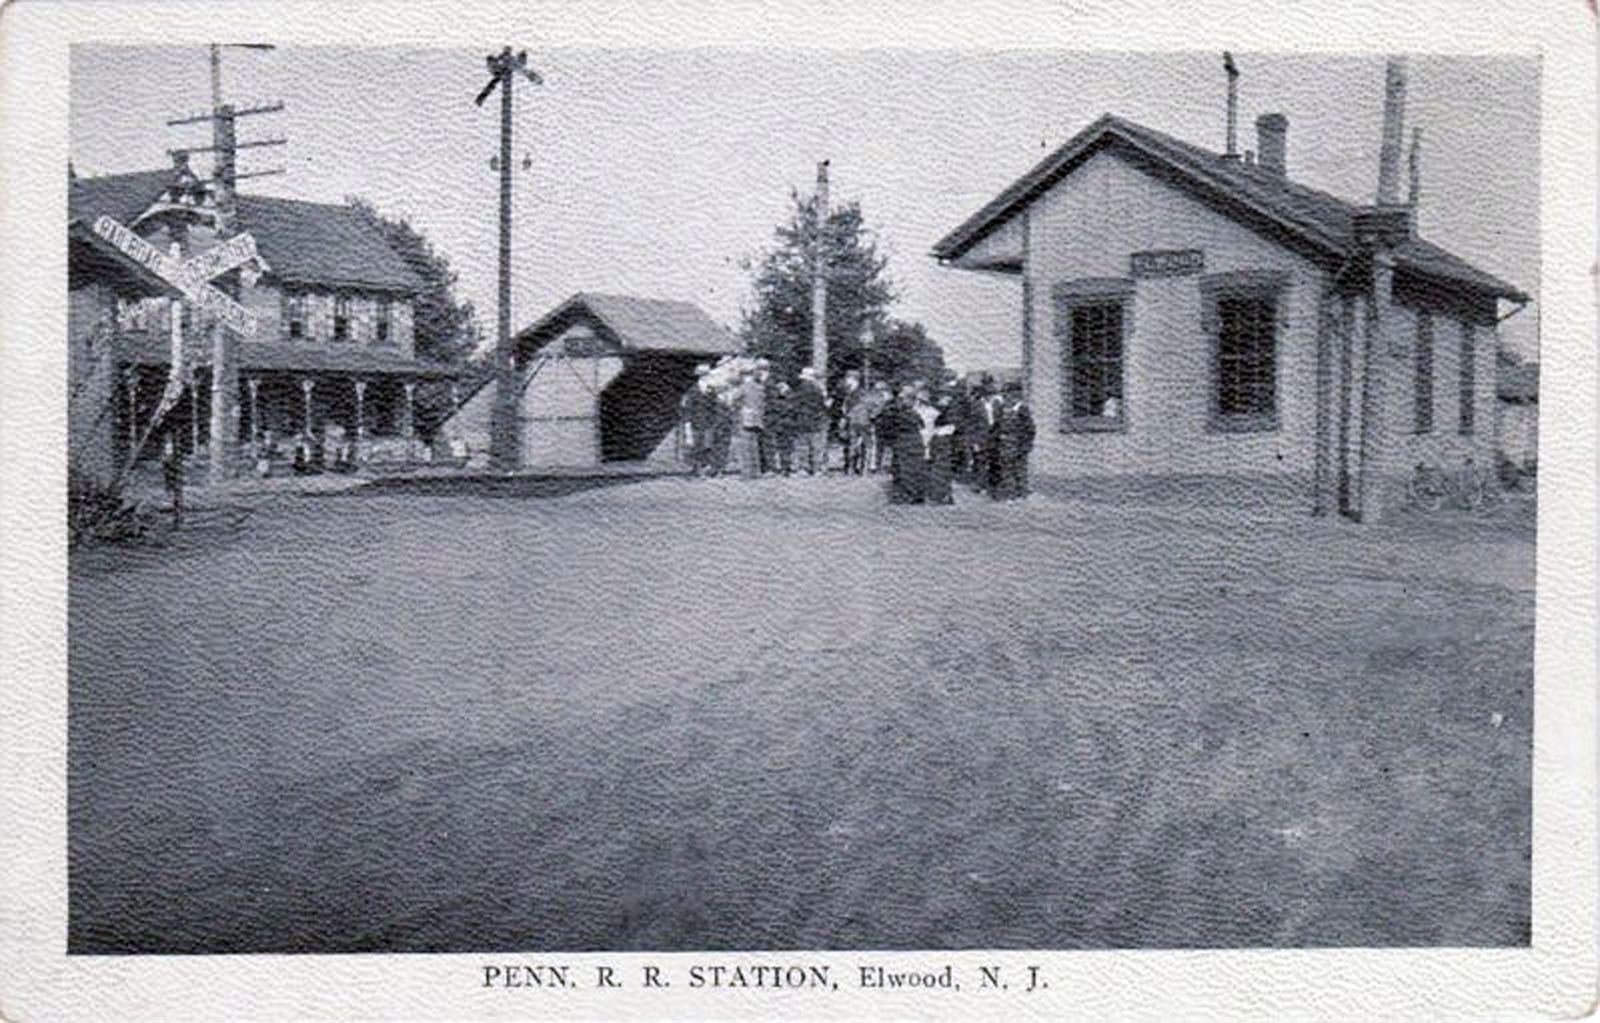 Elwood - Pennsylvania Railroad Stration - 1910s-20s